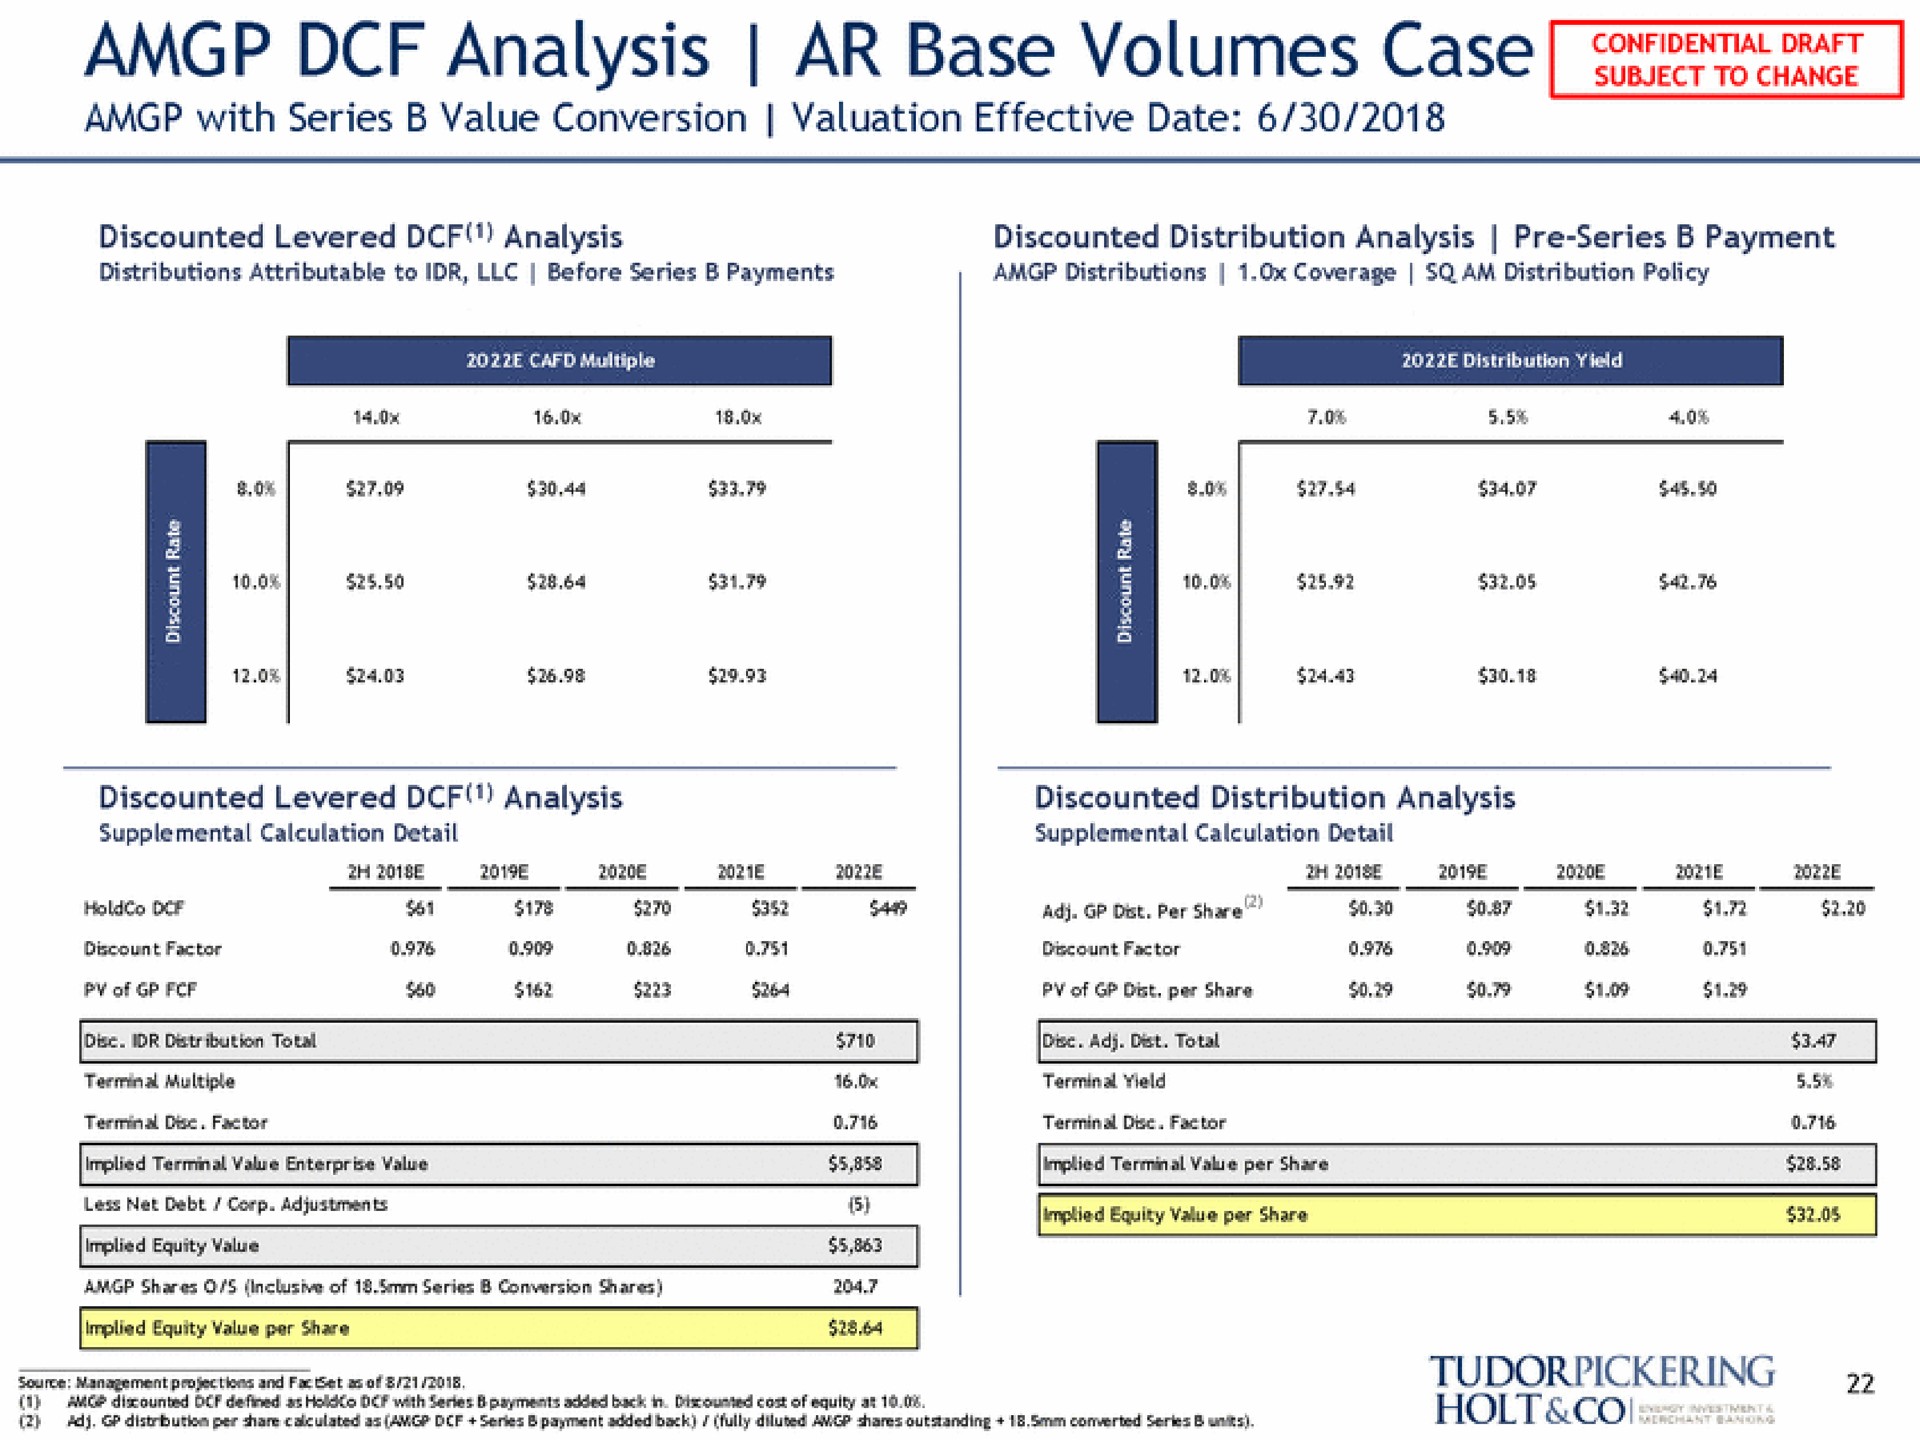 analysis base volumes case a a | Tudor, Pickering, Holt & Co